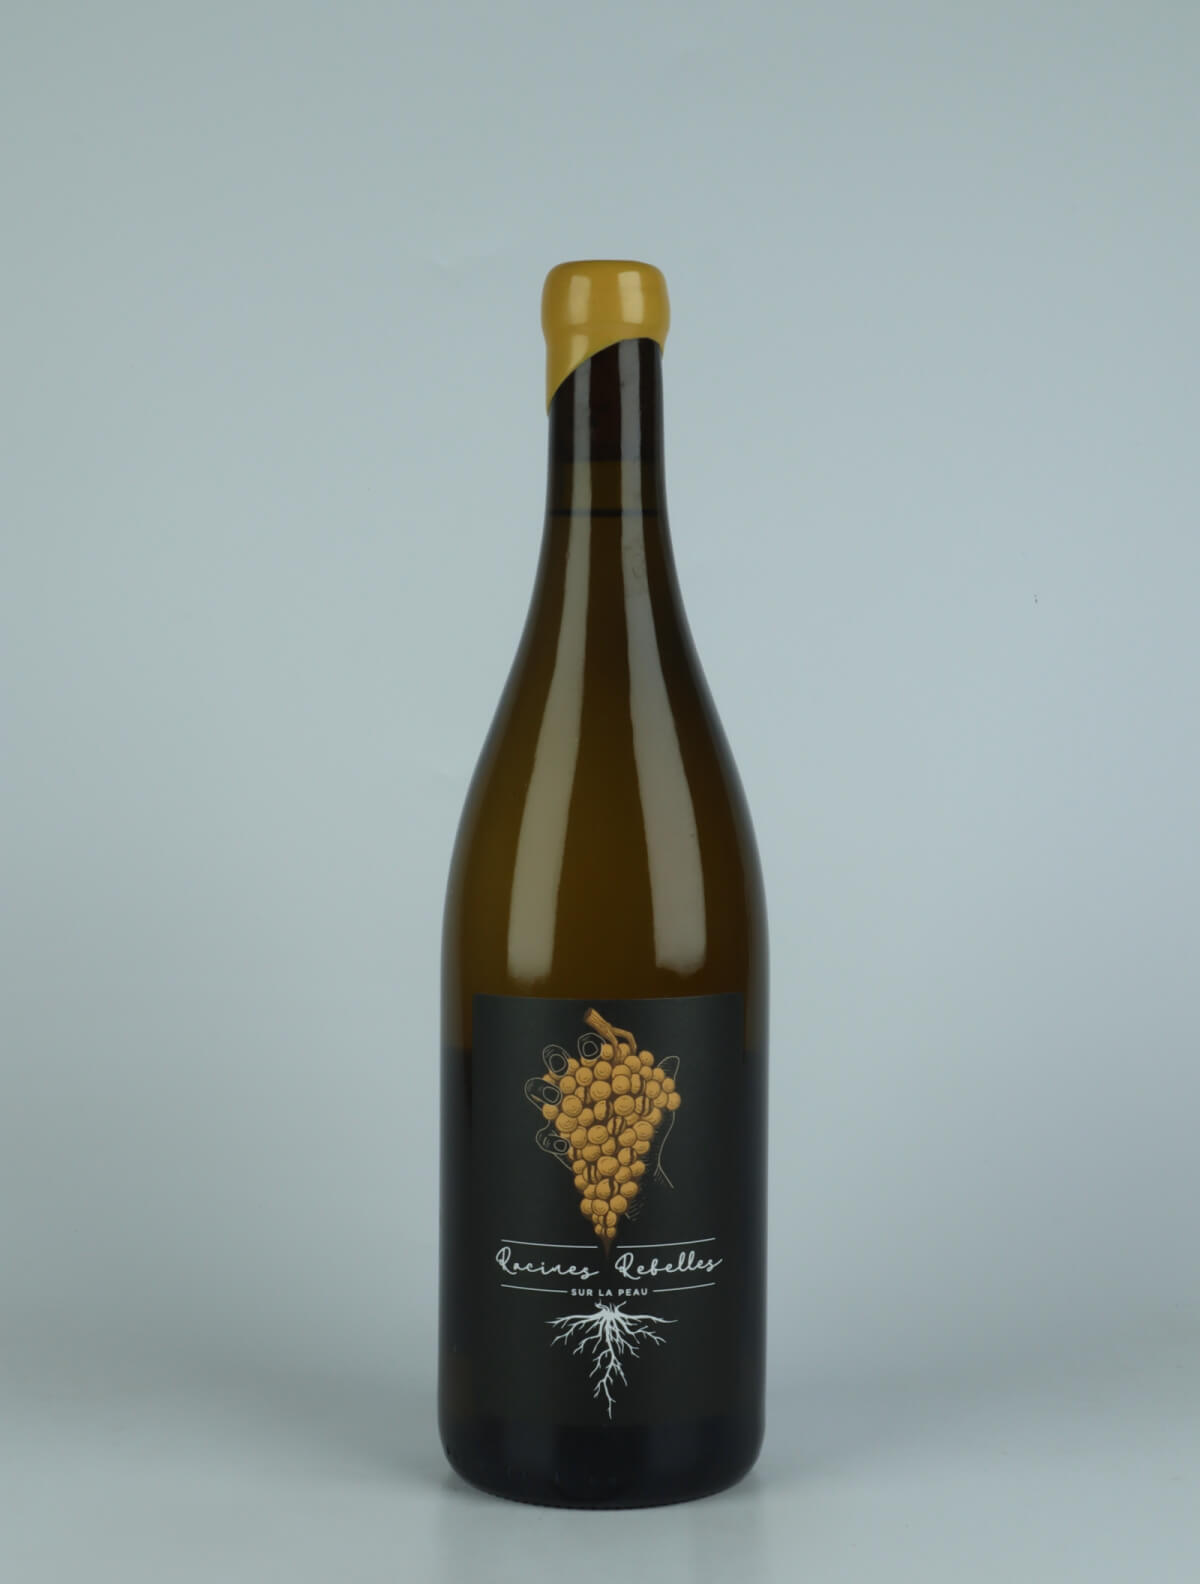 A bottle 2021 Sur la Peau White wine from Racines Rebelles, Moselle in Luxemburg